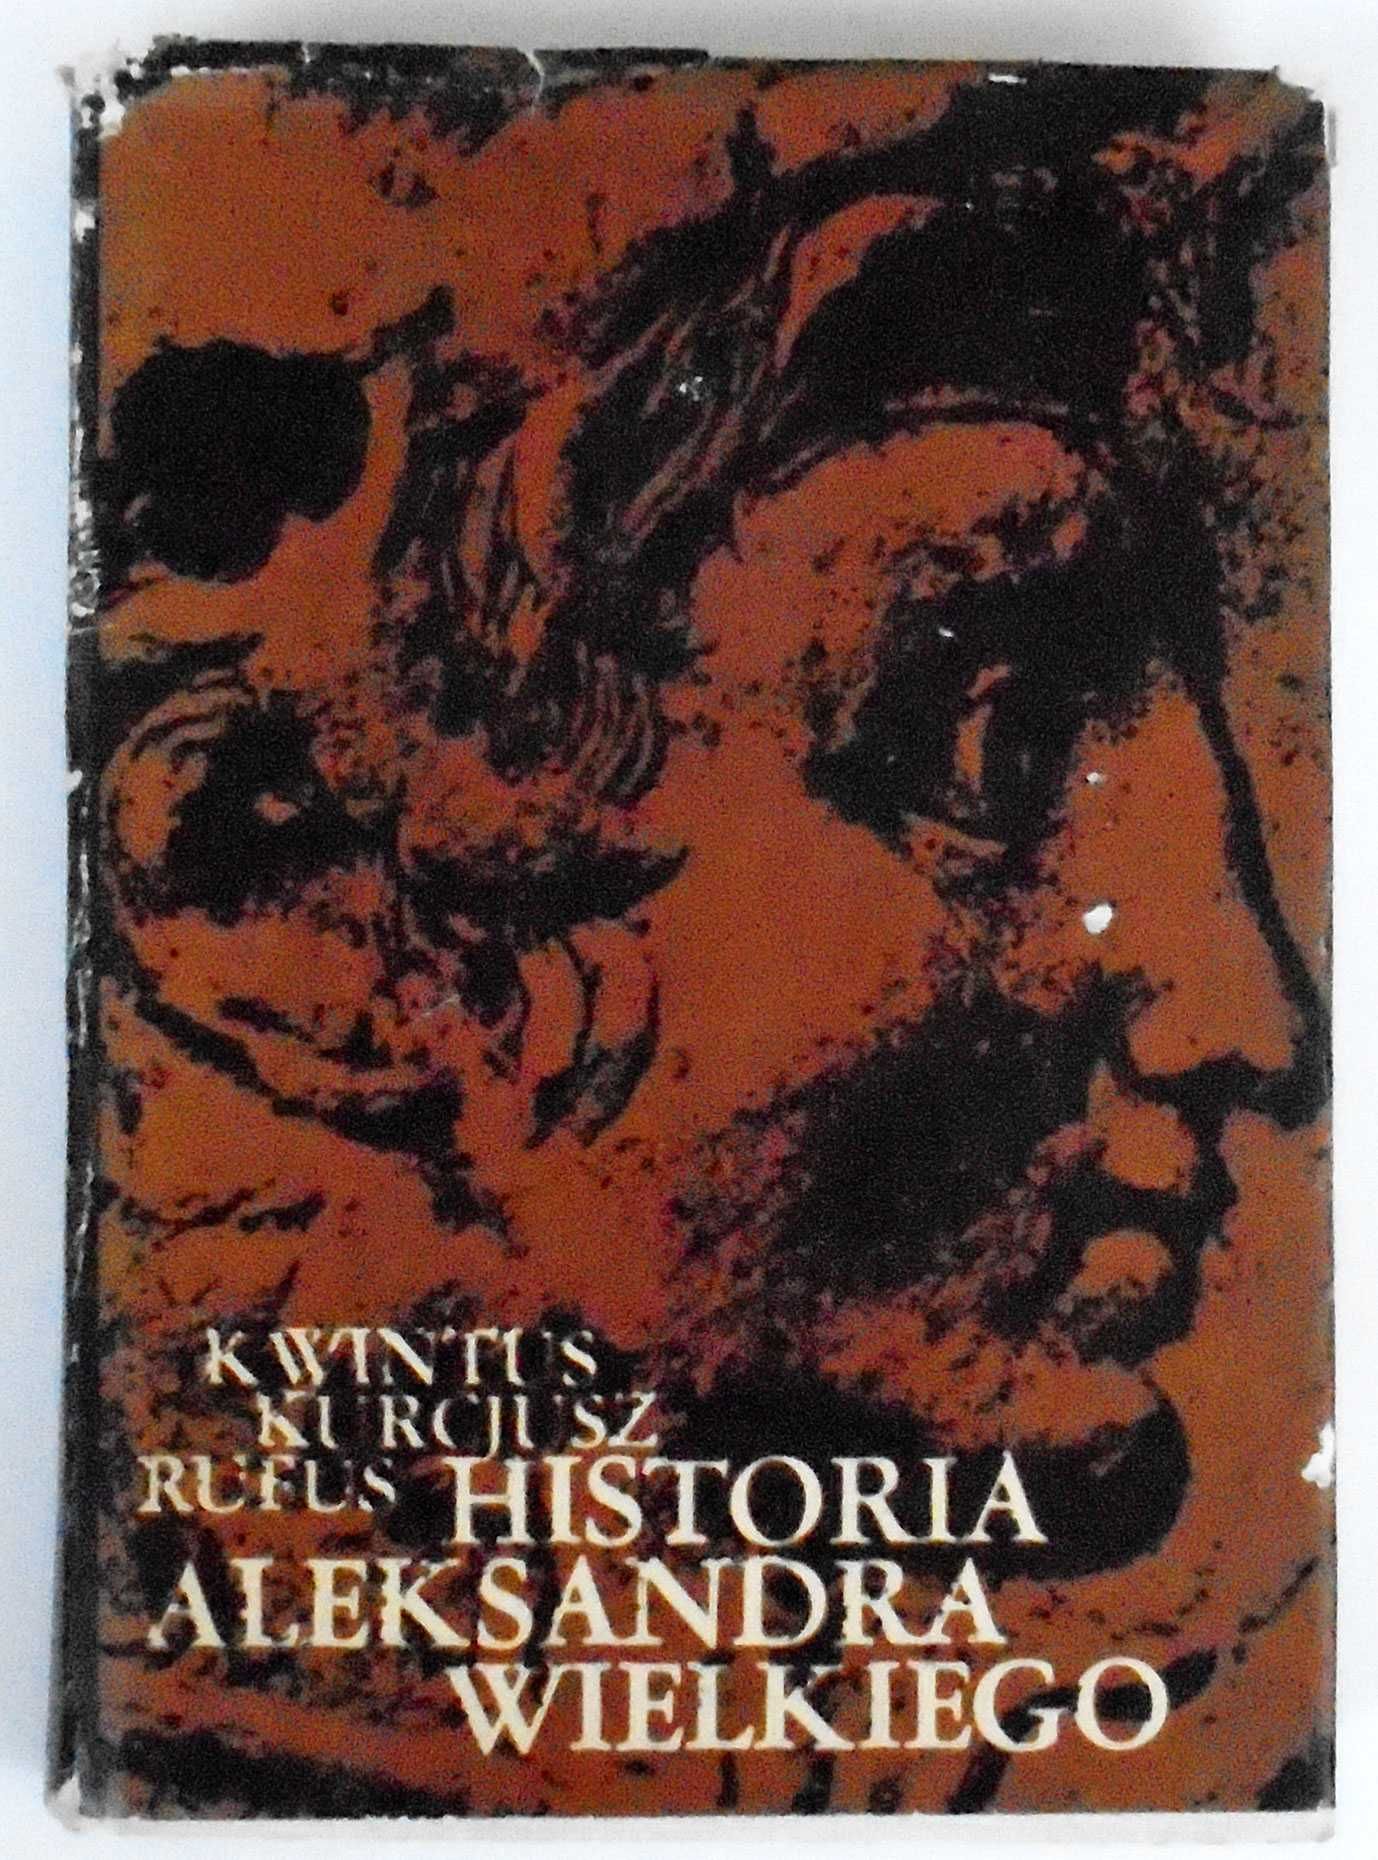 Kwintus Kurcjusz Rufus -  Historia Aleksandra Wielkiego ( на польском)